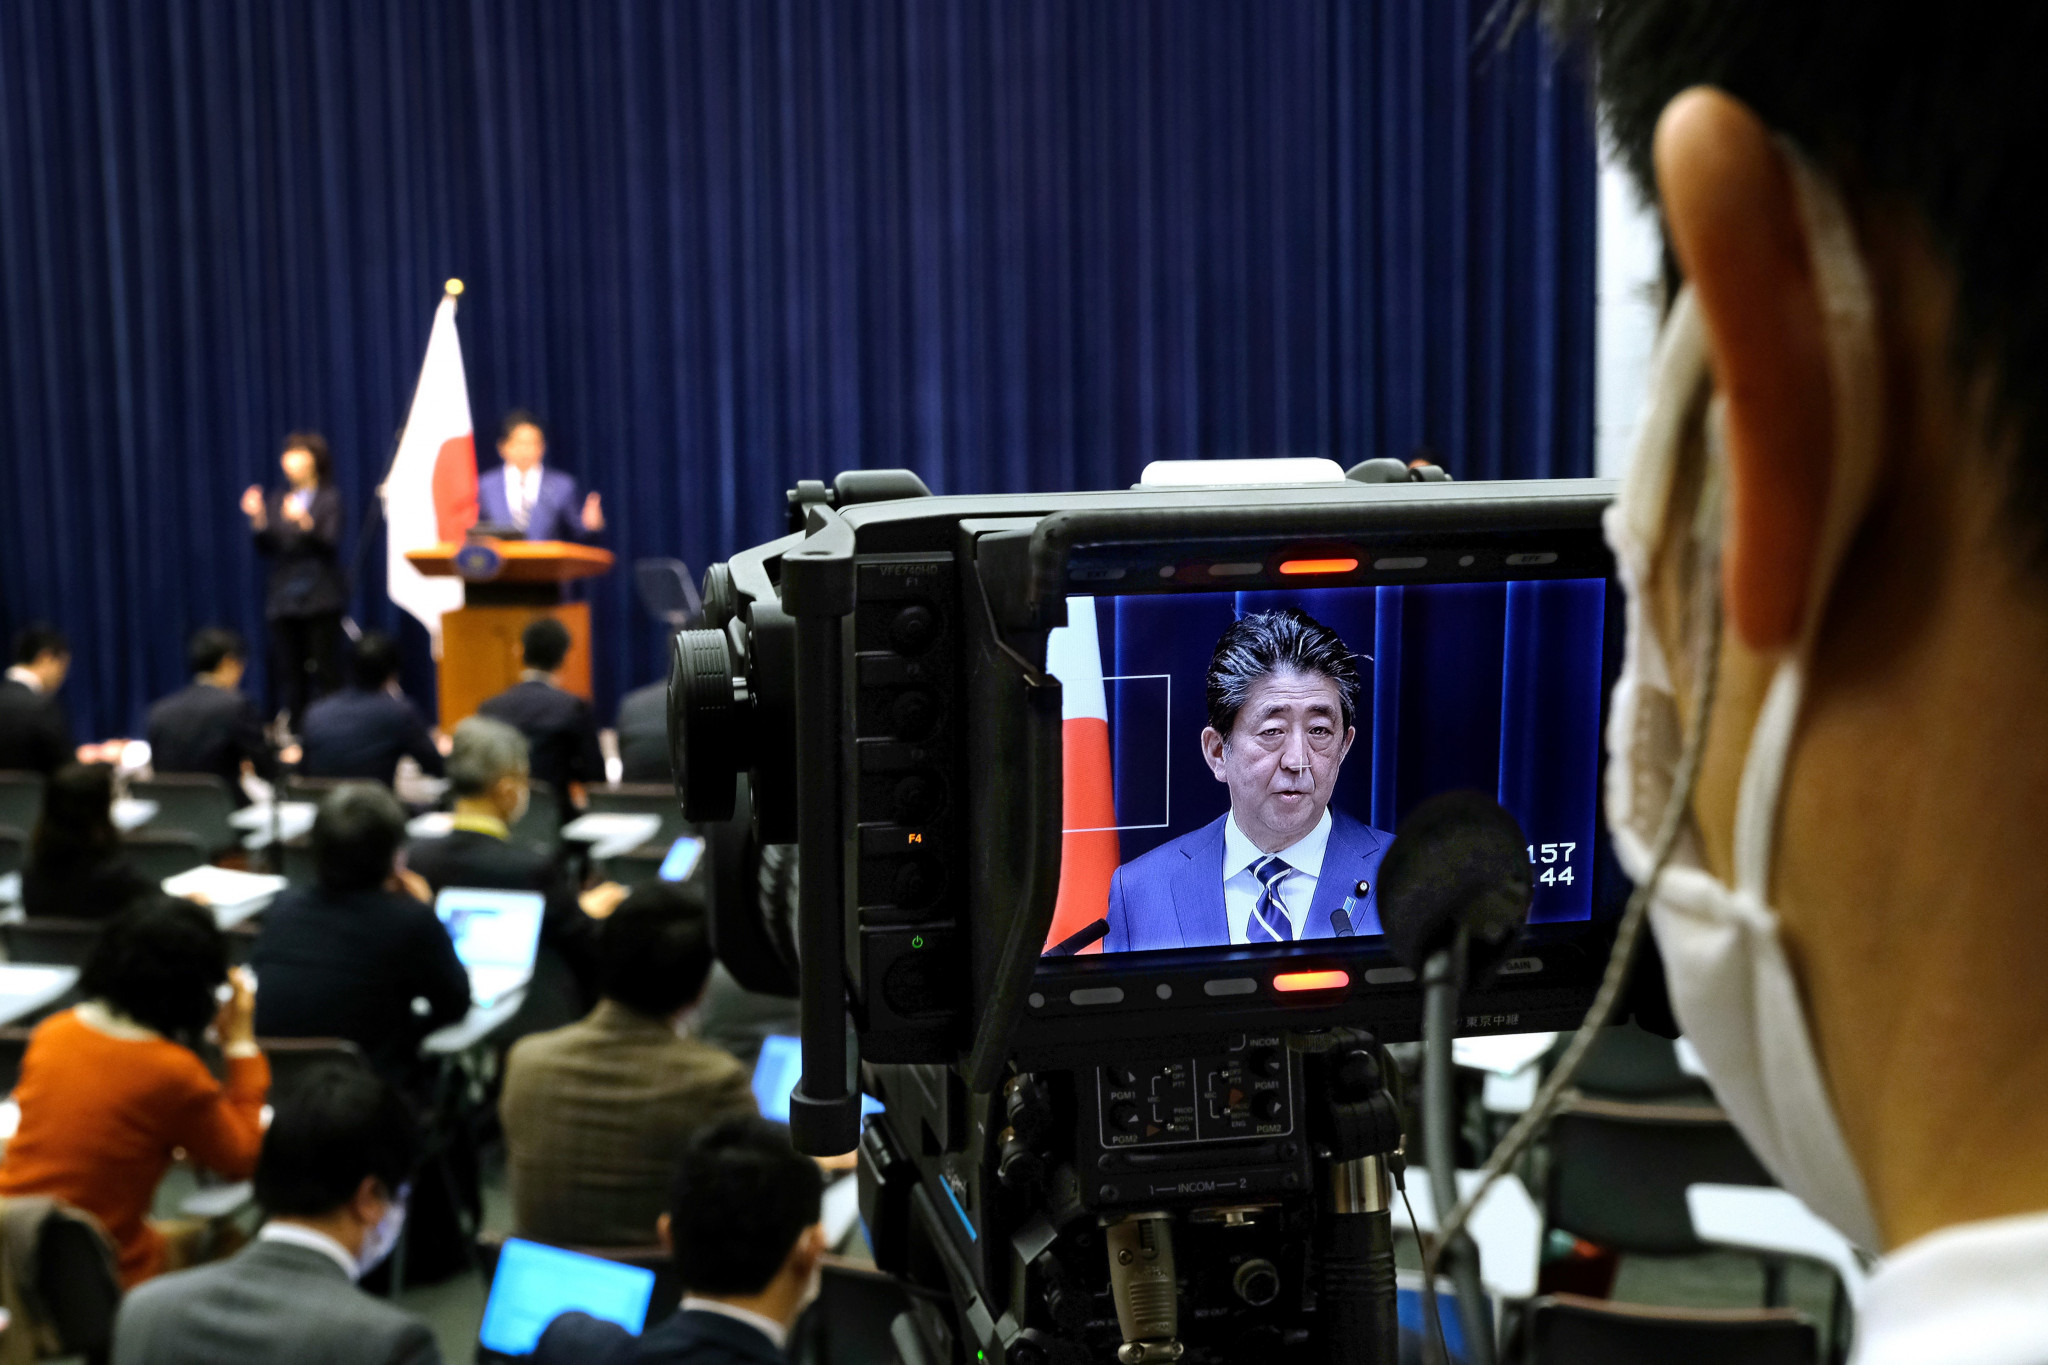 Prime Minister Shinzō Abe says Japan faces a 